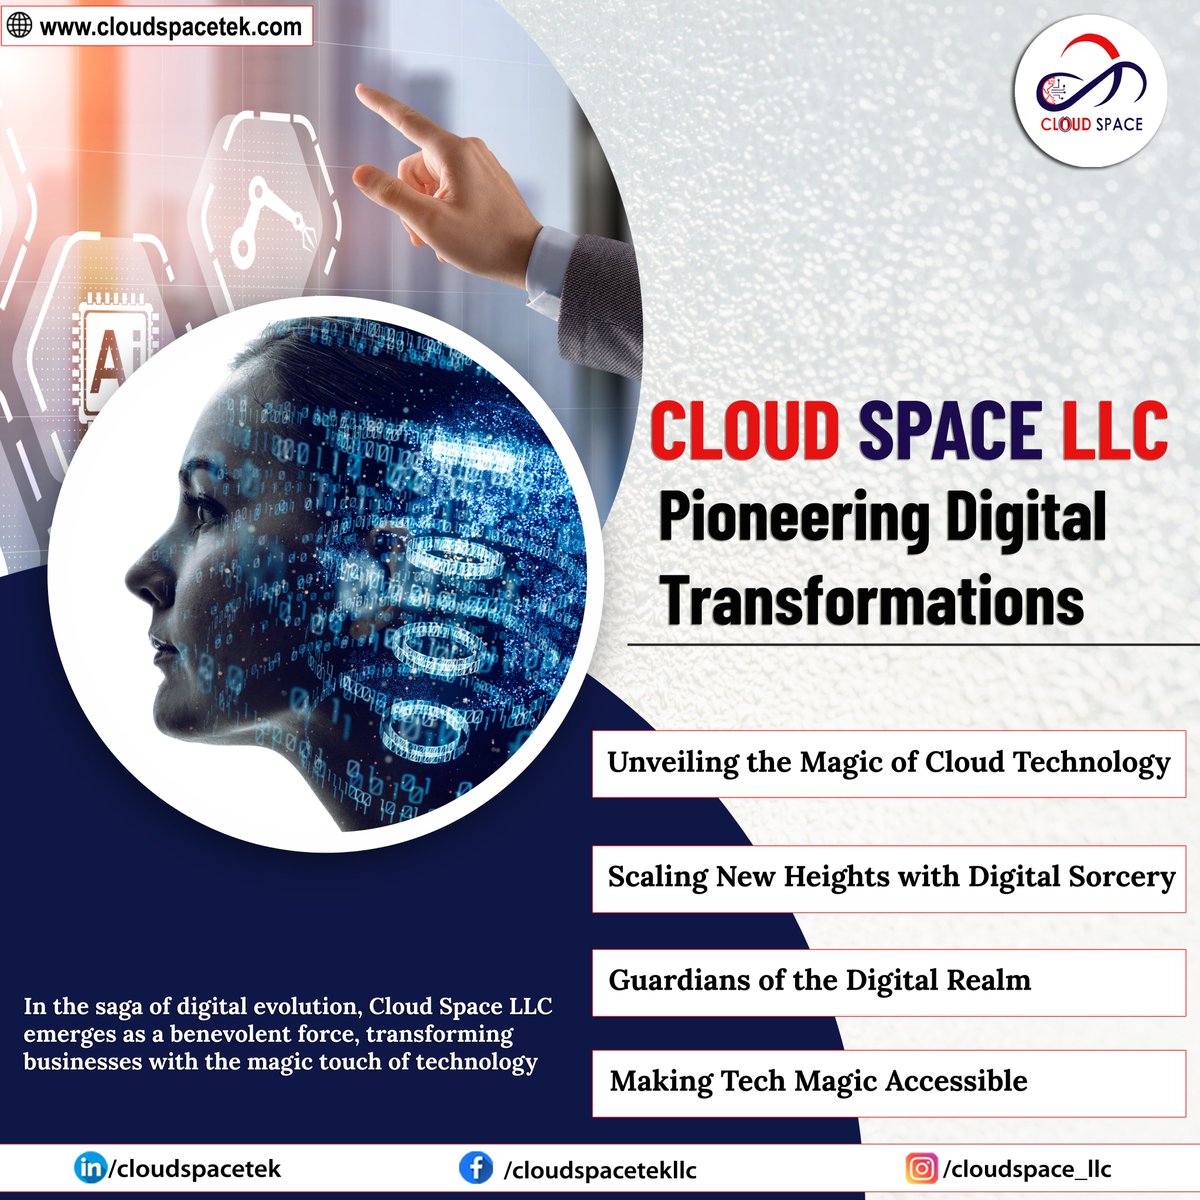 𝐂𝐥𝐨𝐮𝐝 𝐒𝐩𝐚𝐜𝐞 𝐋𝐋𝐂: 𝐏𝐢𝐨𝐧𝐞𝐞𝐫𝐢𝐧𝐠 𝐃𝐢𝐠𝐢𝐭𝐚𝐥 𝐓𝐫𝐚𝐧𝐬𝐟𝐨𝐫𝐦𝐚𝐭𝐢𝐨𝐧𝐬

#CloudSpaceLLC #TechTransformation #DigitalInnovation #CloudMagic #BusinessEvolution #TechWizards #DigitalSorcery #CyberGuardians #InnovateWithCloud #AccessibleTech #DigitalRealm